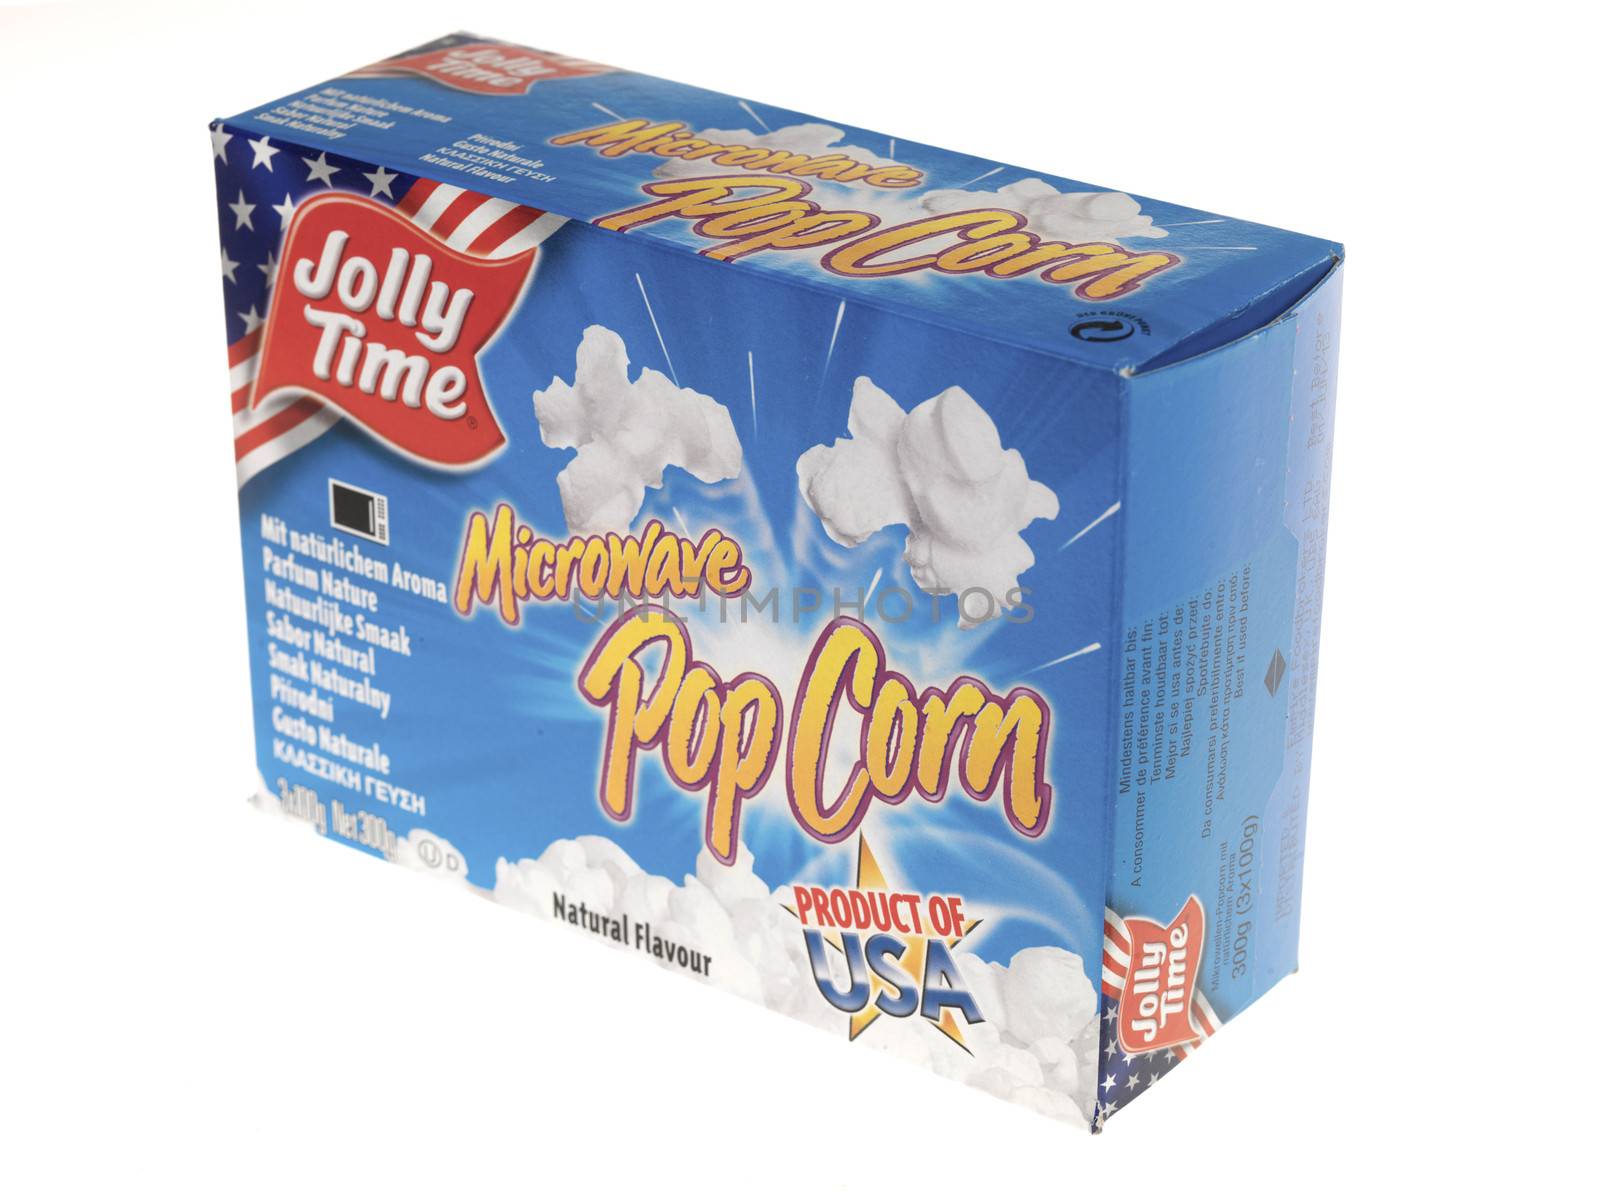 Box of Microwave Popcorn